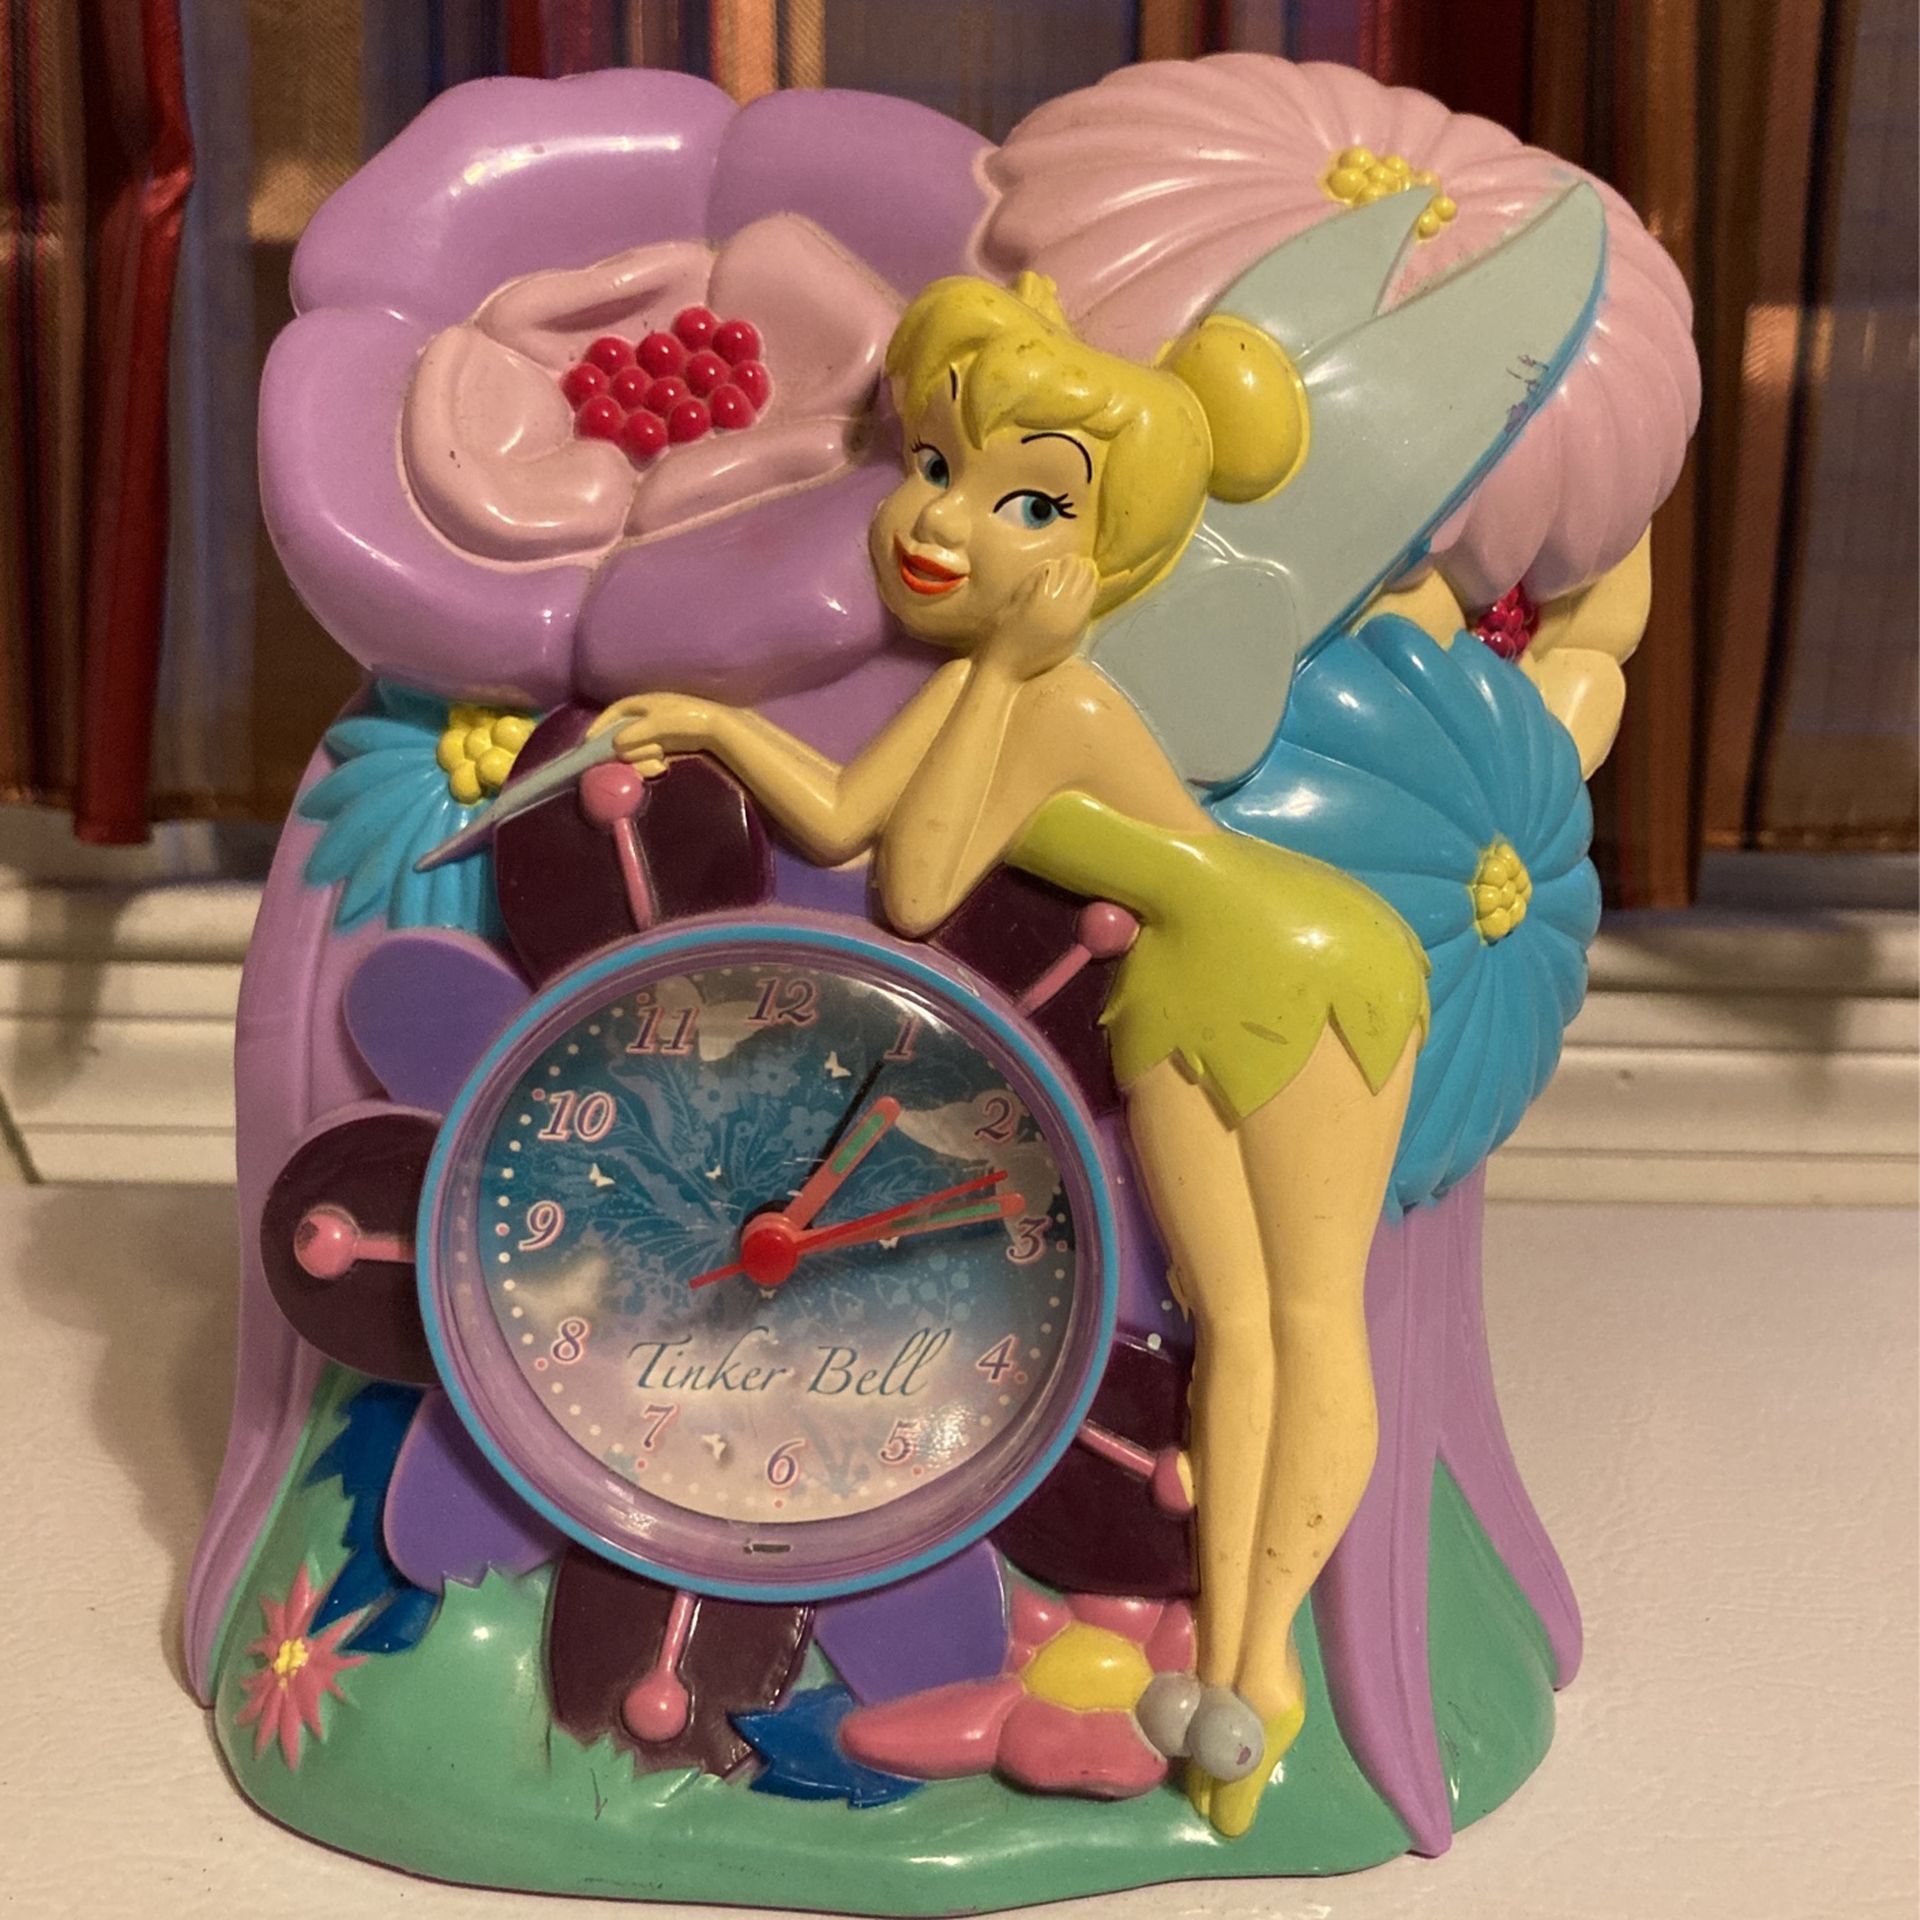 Disney Tinker Bell Alarm Clock And Money Saver